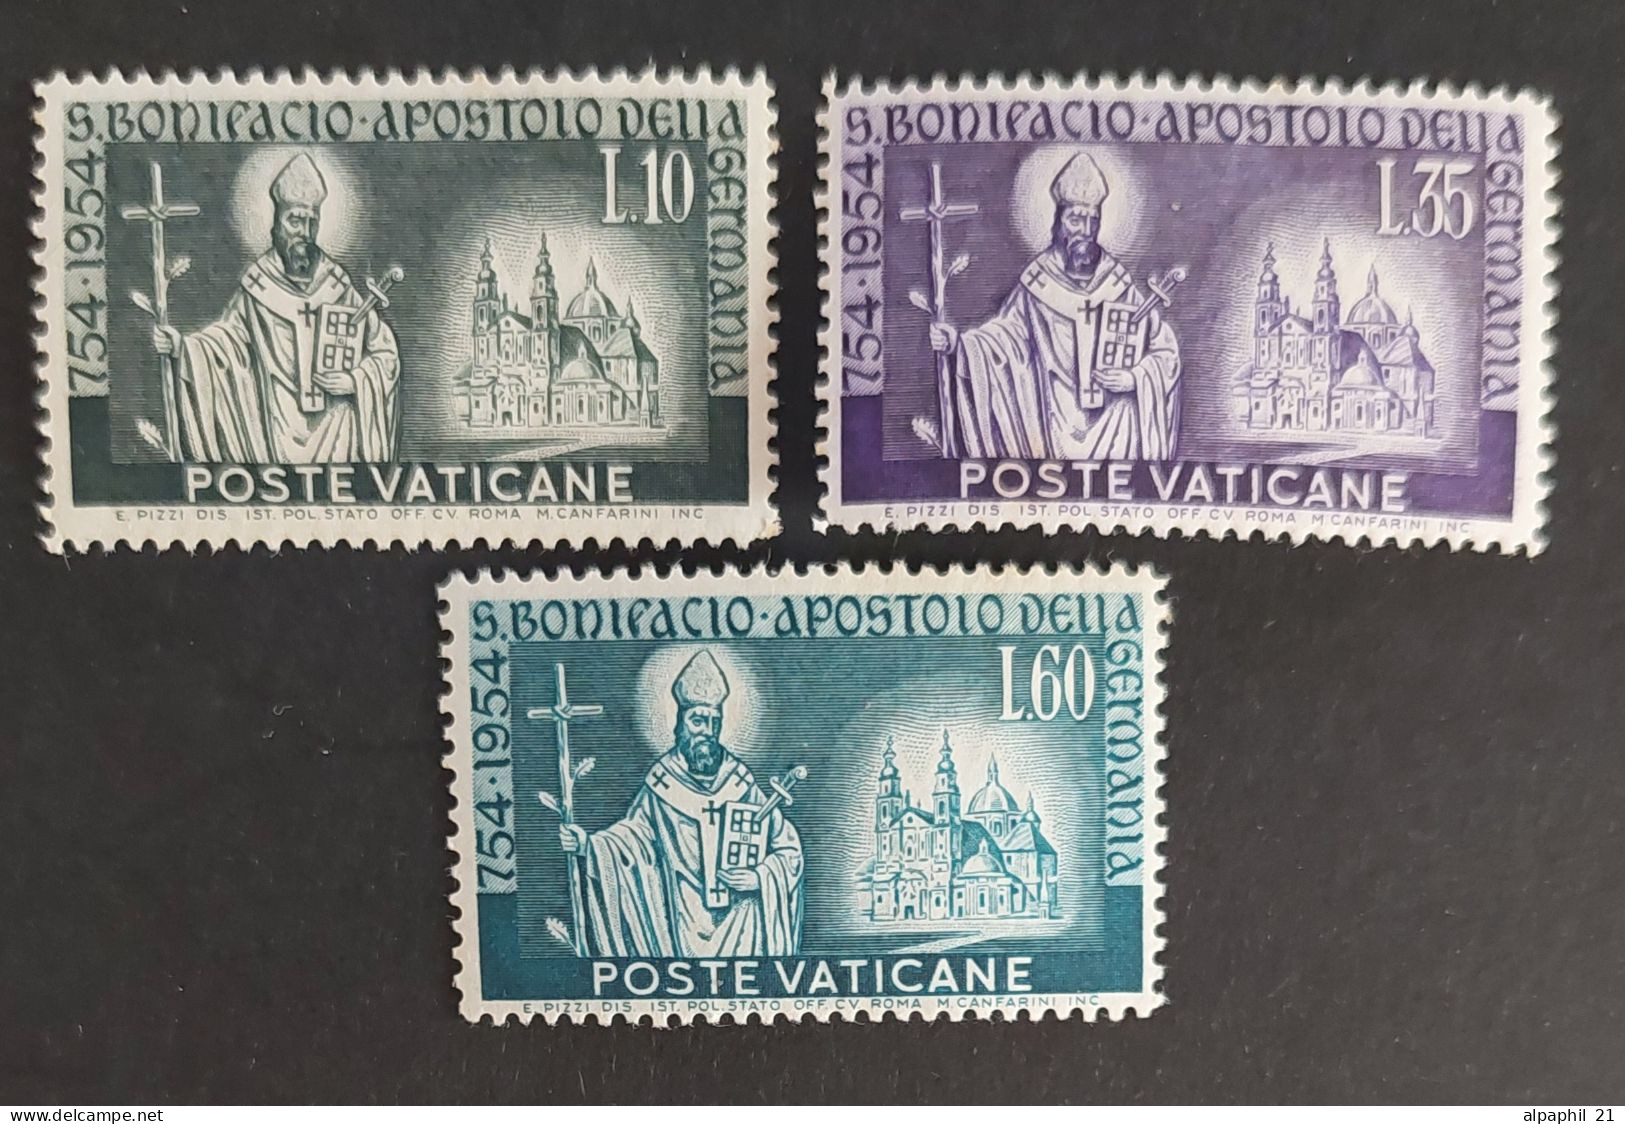 Città Del Vaticano: St. Boniface And Abbey Of Fulda, 1955 - Unused Stamps